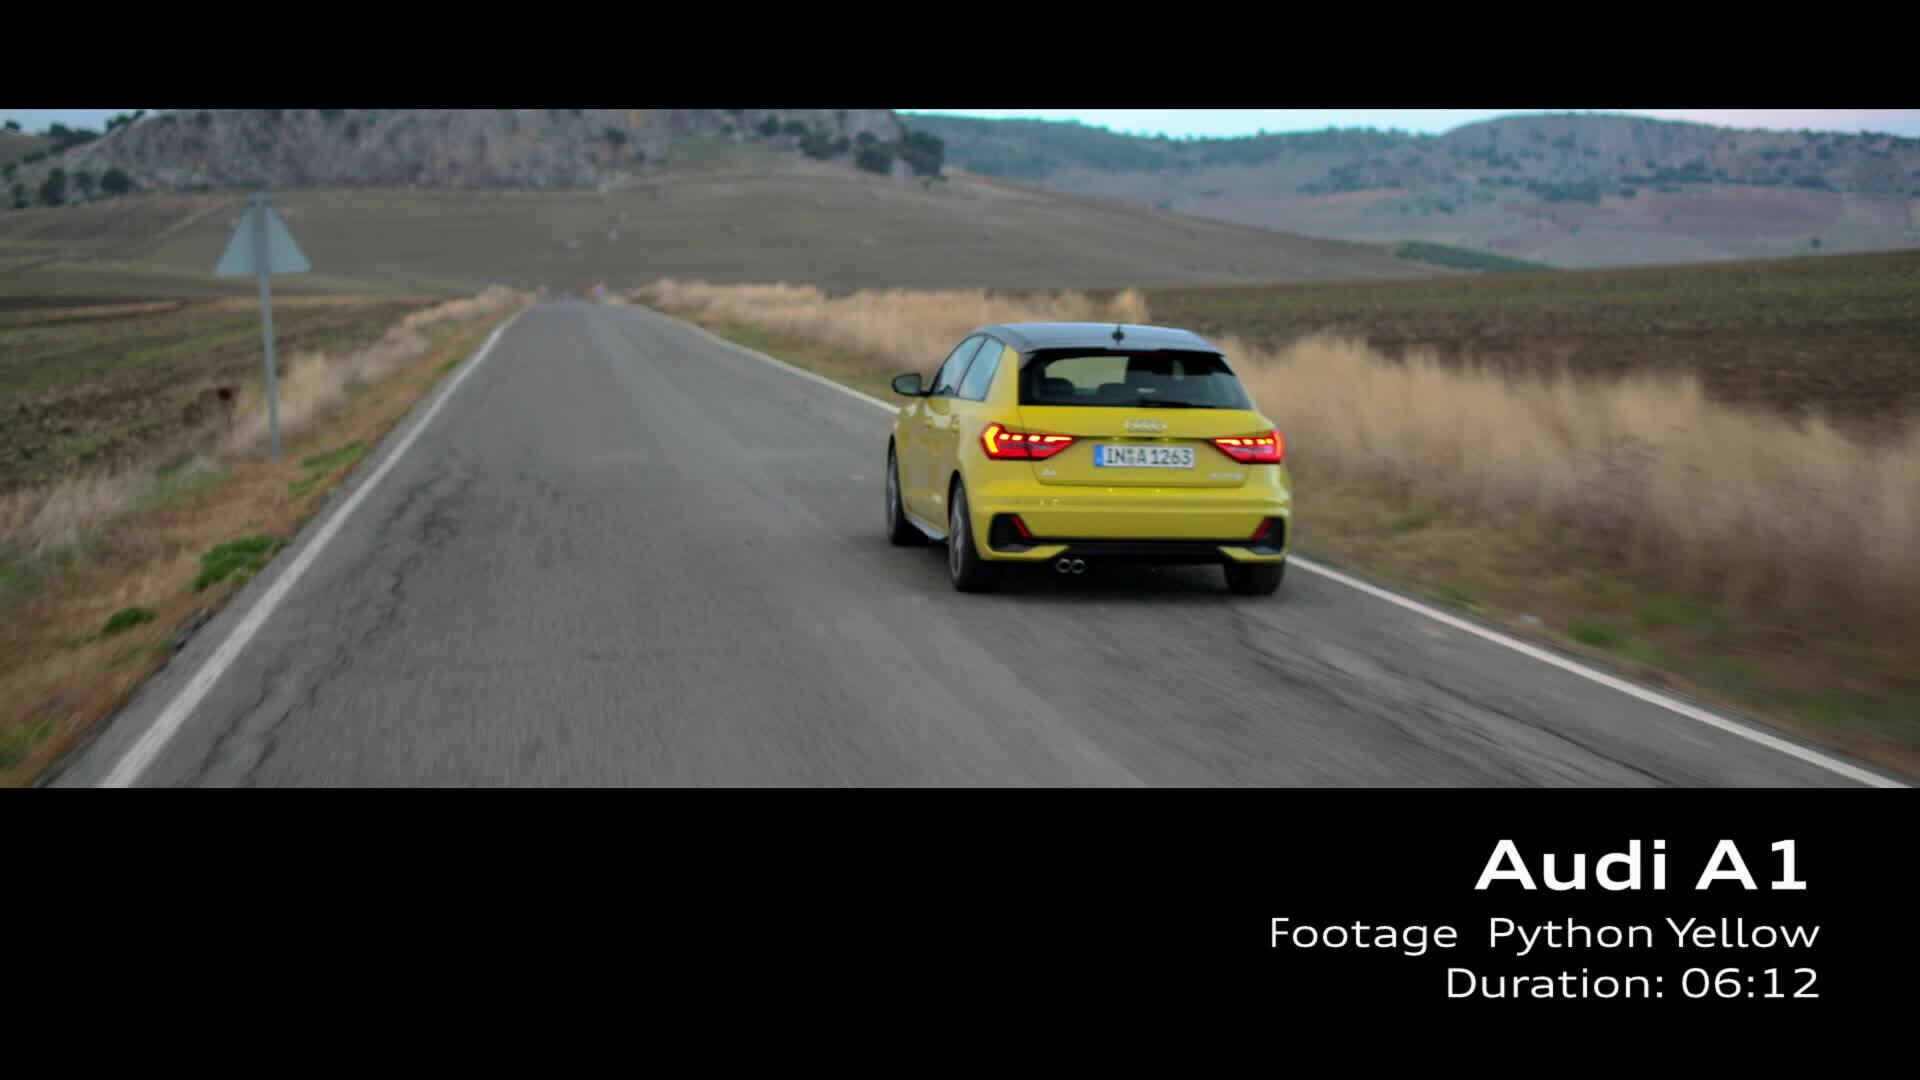 Audi A1 Footage Pythongelb (2018)